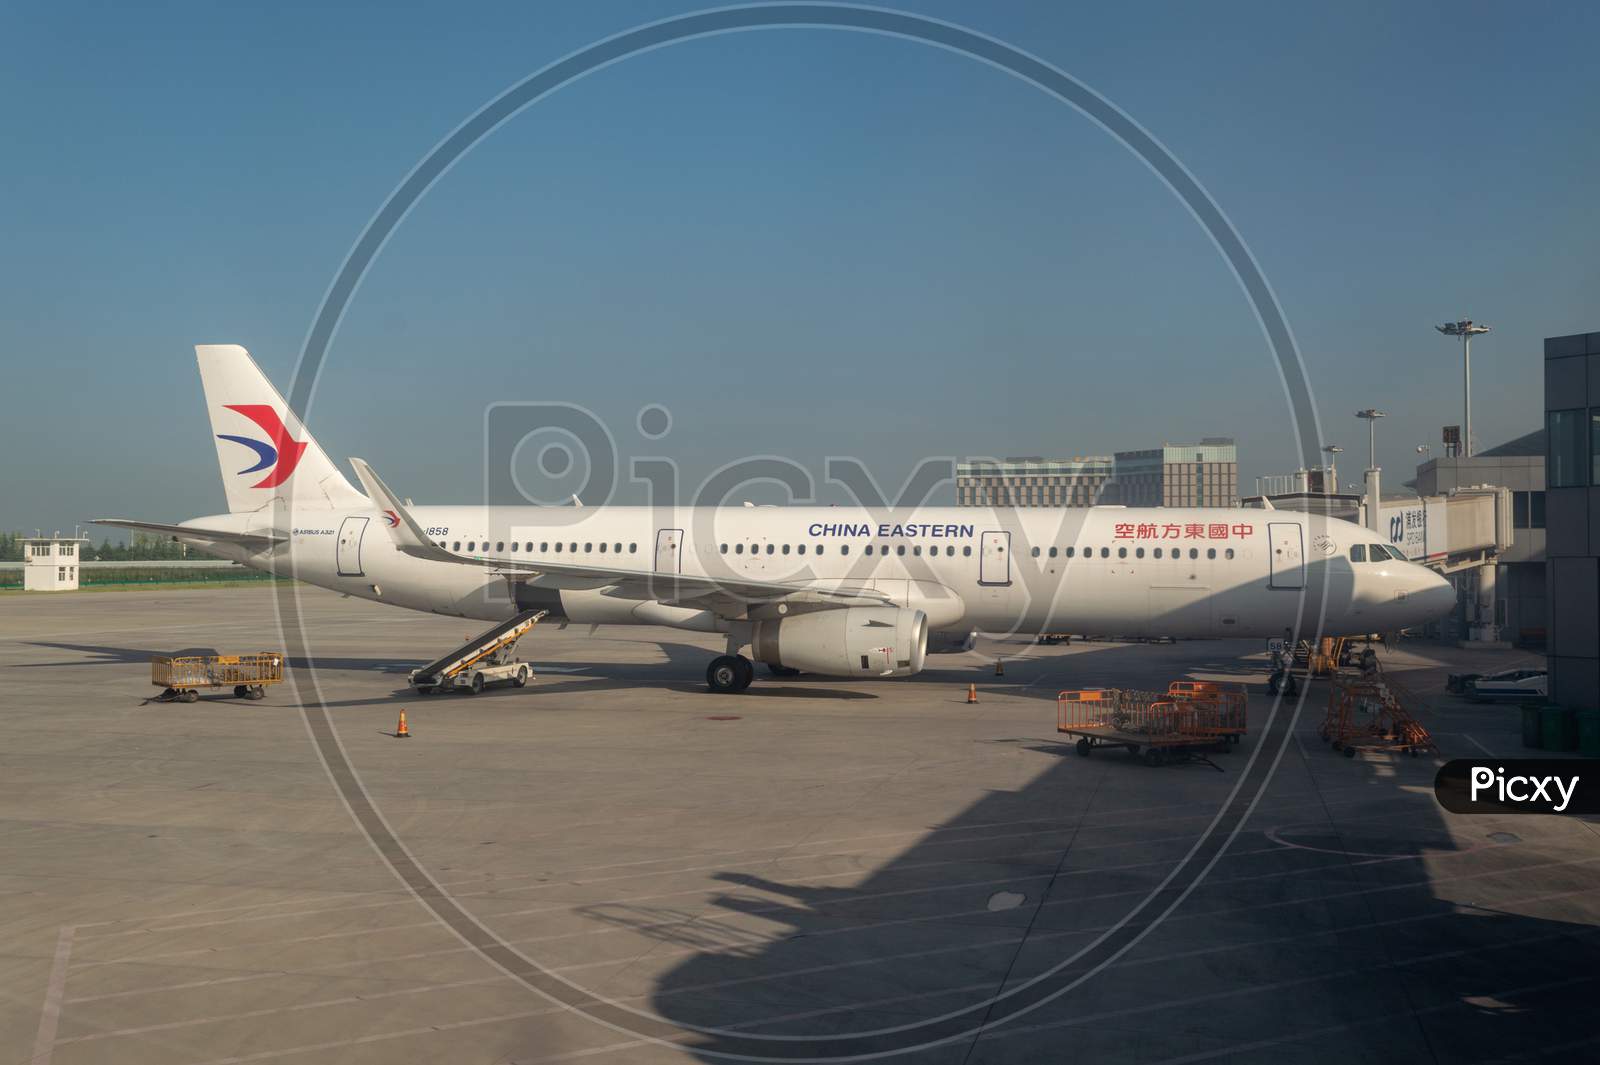 Airplane Of China Eastern Airline At Xian Xianyang International Airport, China